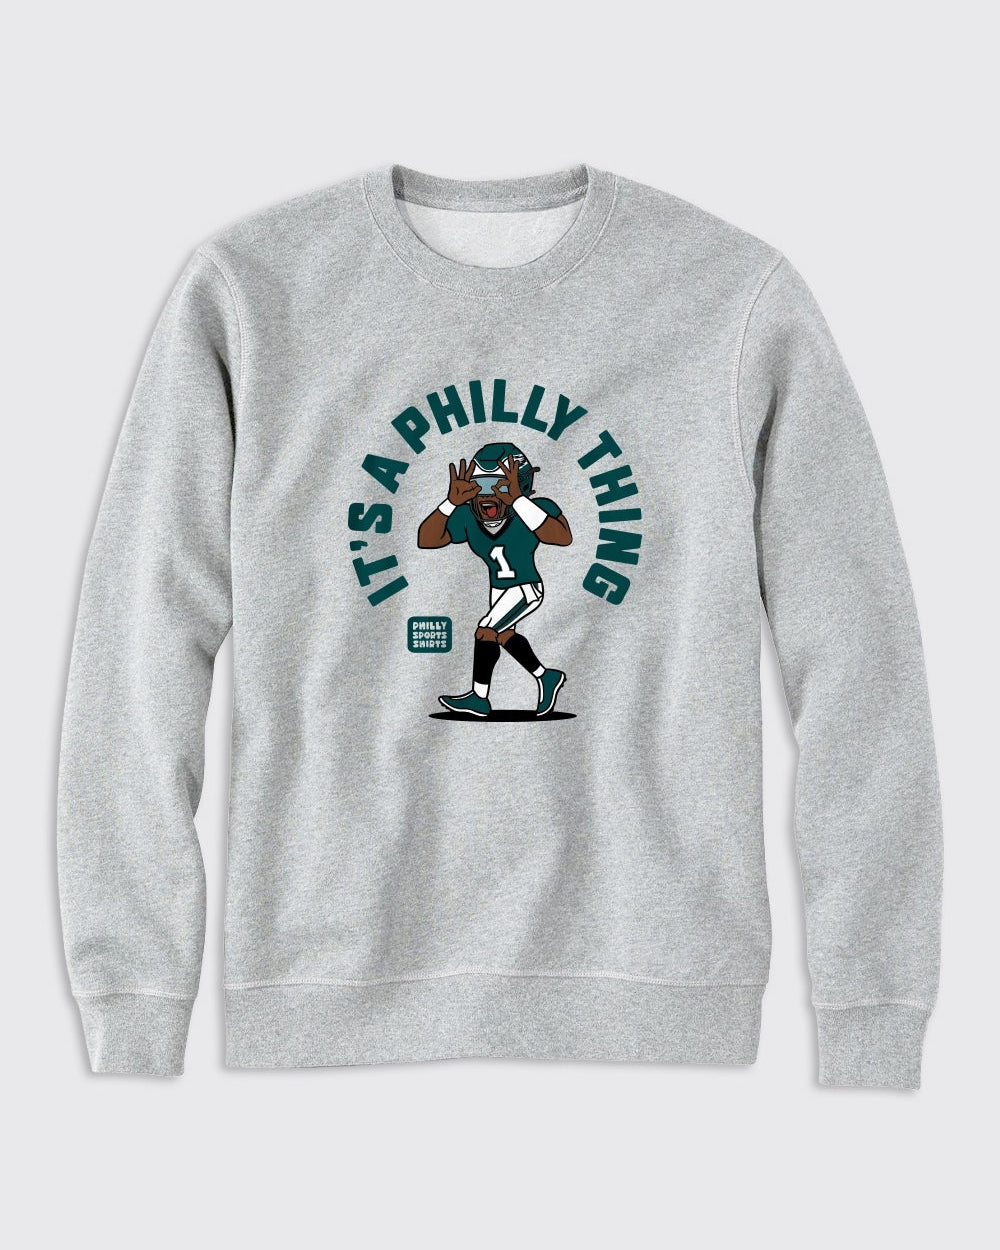 Philadelphia Phillies Crewneck Sweatshirt